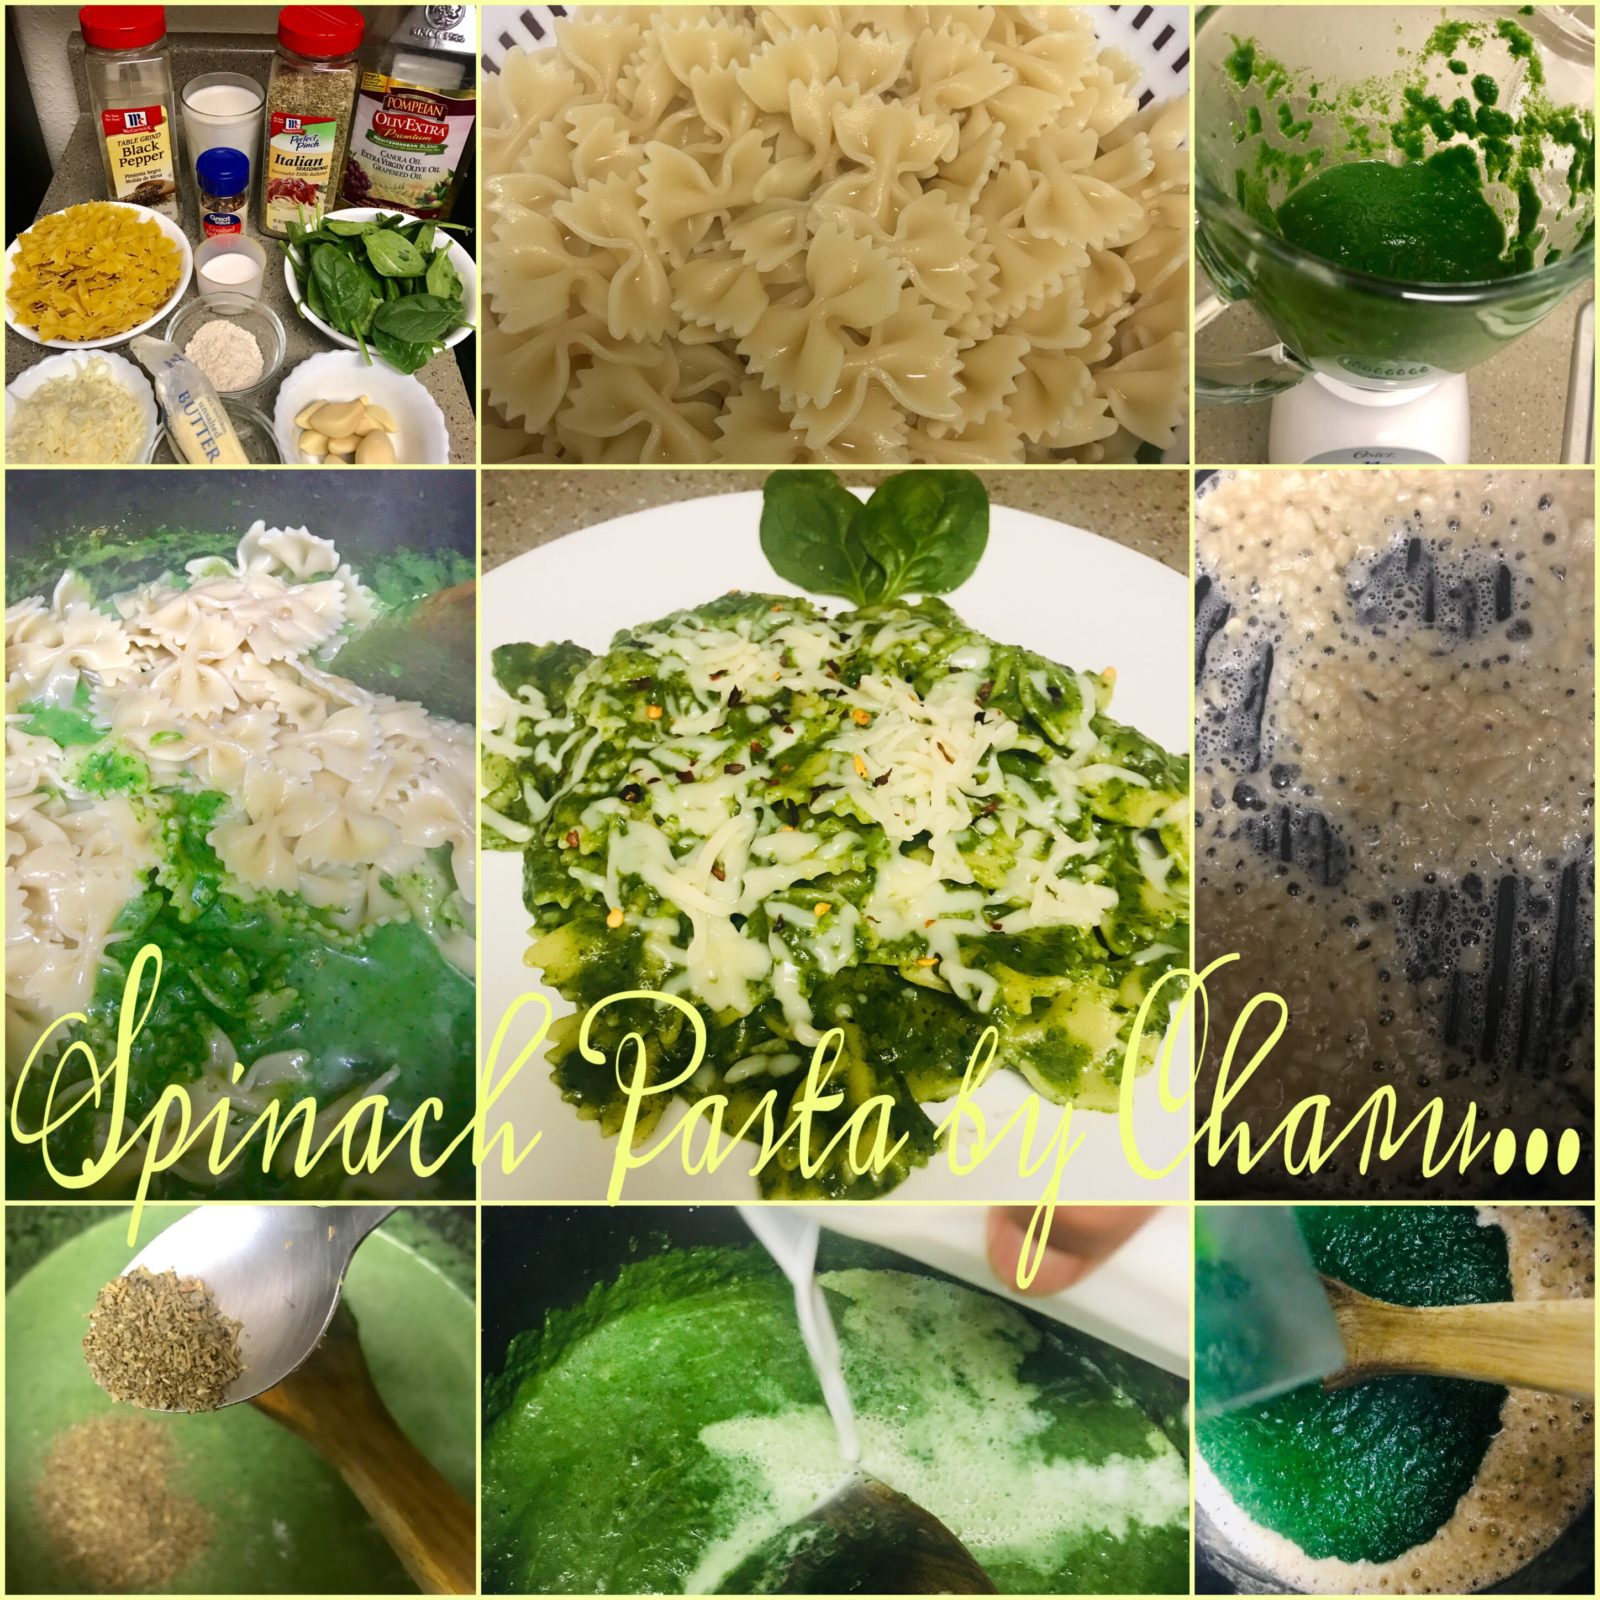 Spinach Pasta coocking process